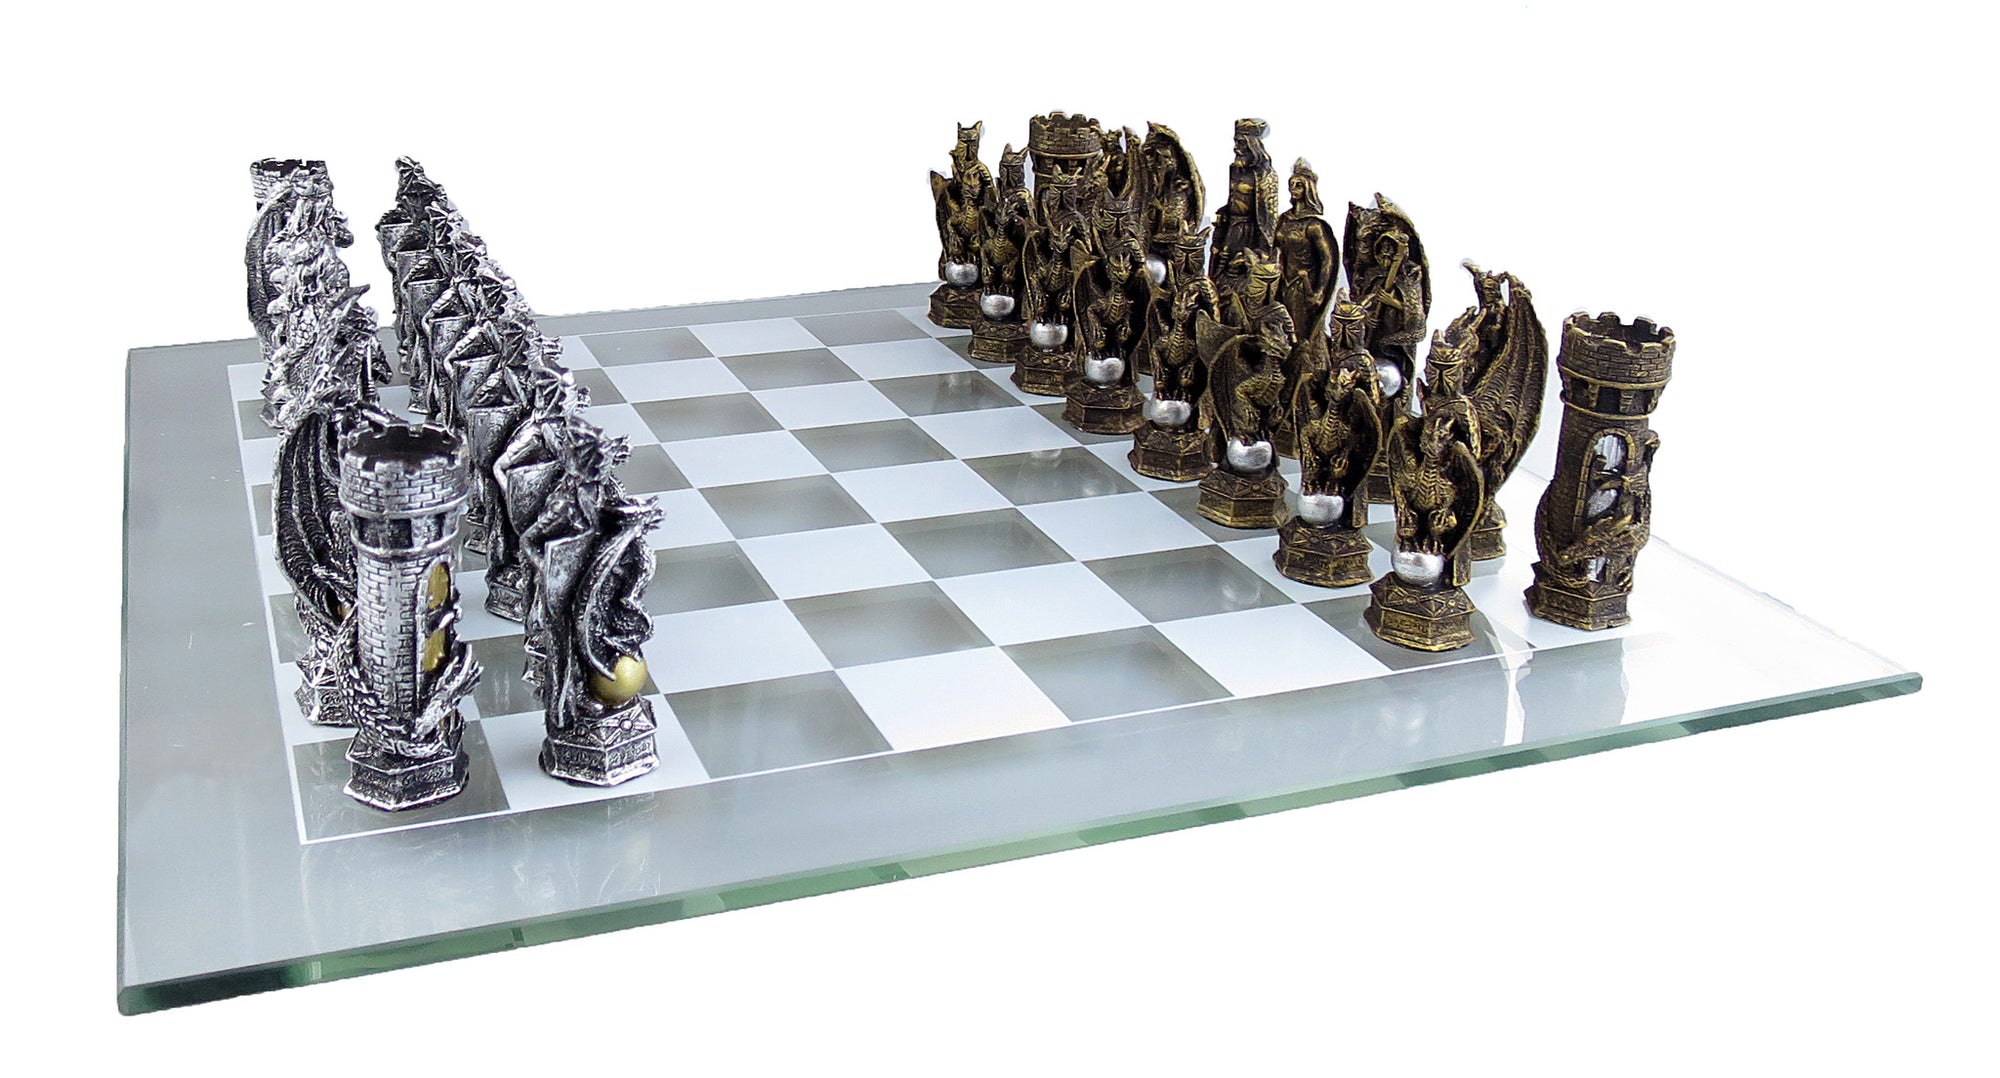 Chess Set Folding 3 King, Board Games -  Canada